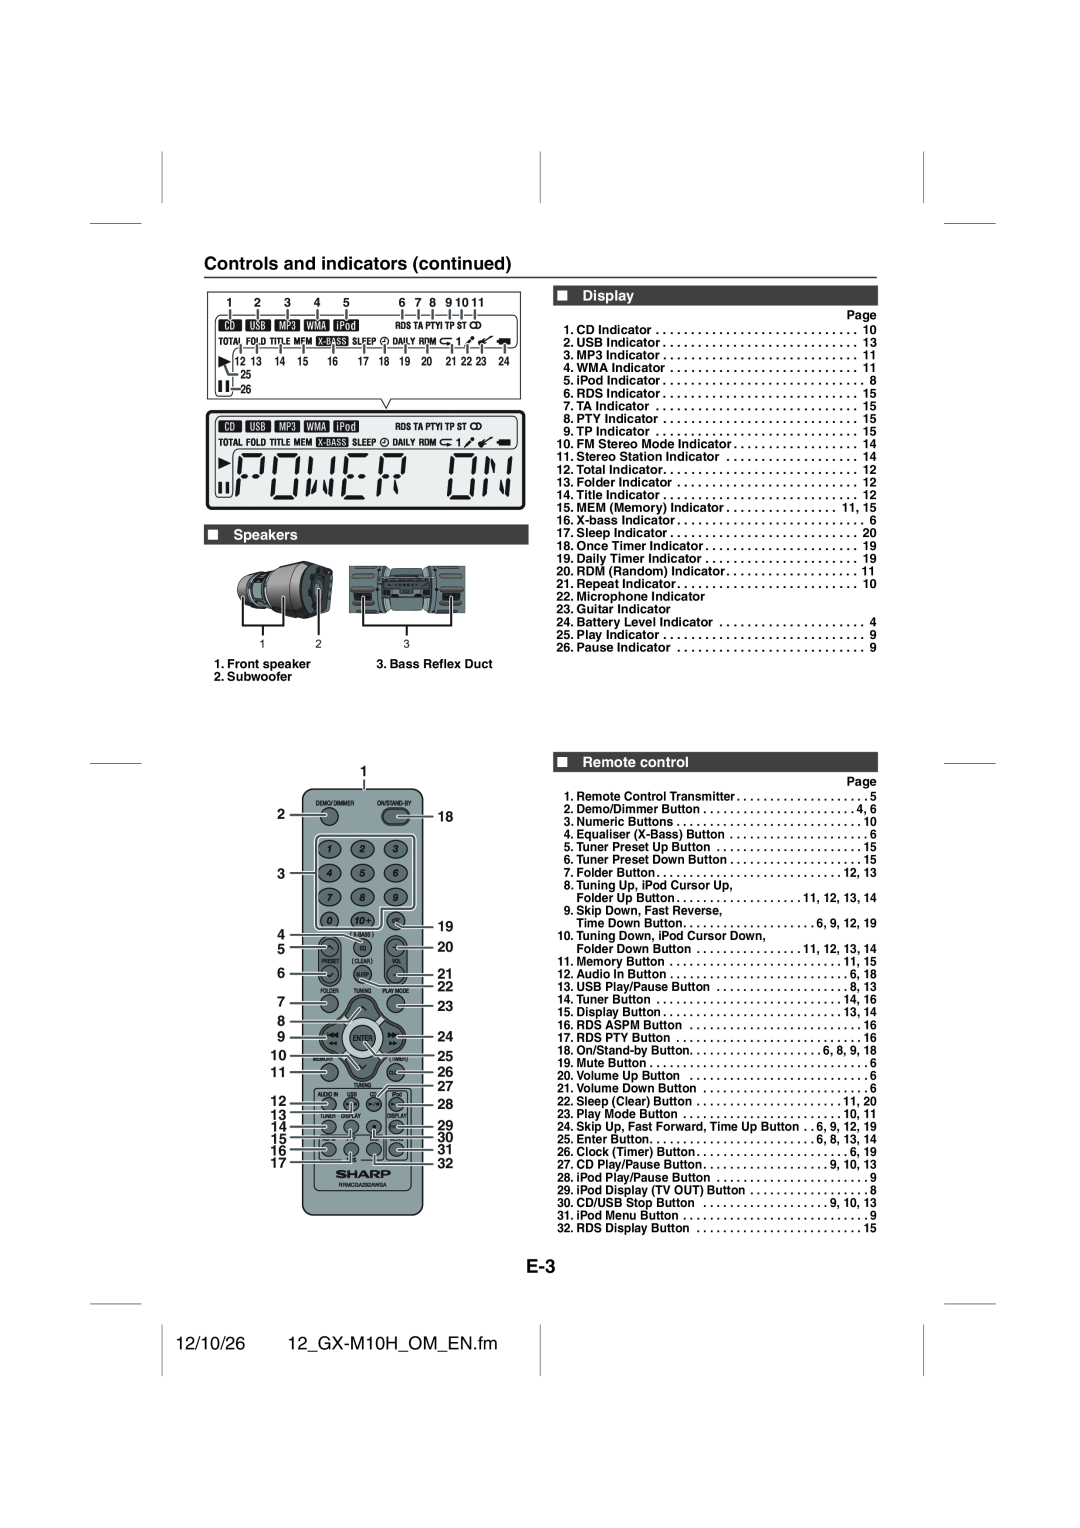 Sharp GX-M10H(OR), GX-M10H(RD) Controls and indicators continued, Display, Remote control, 12/10/26 12_GX-M10H_OM_EN.fm 